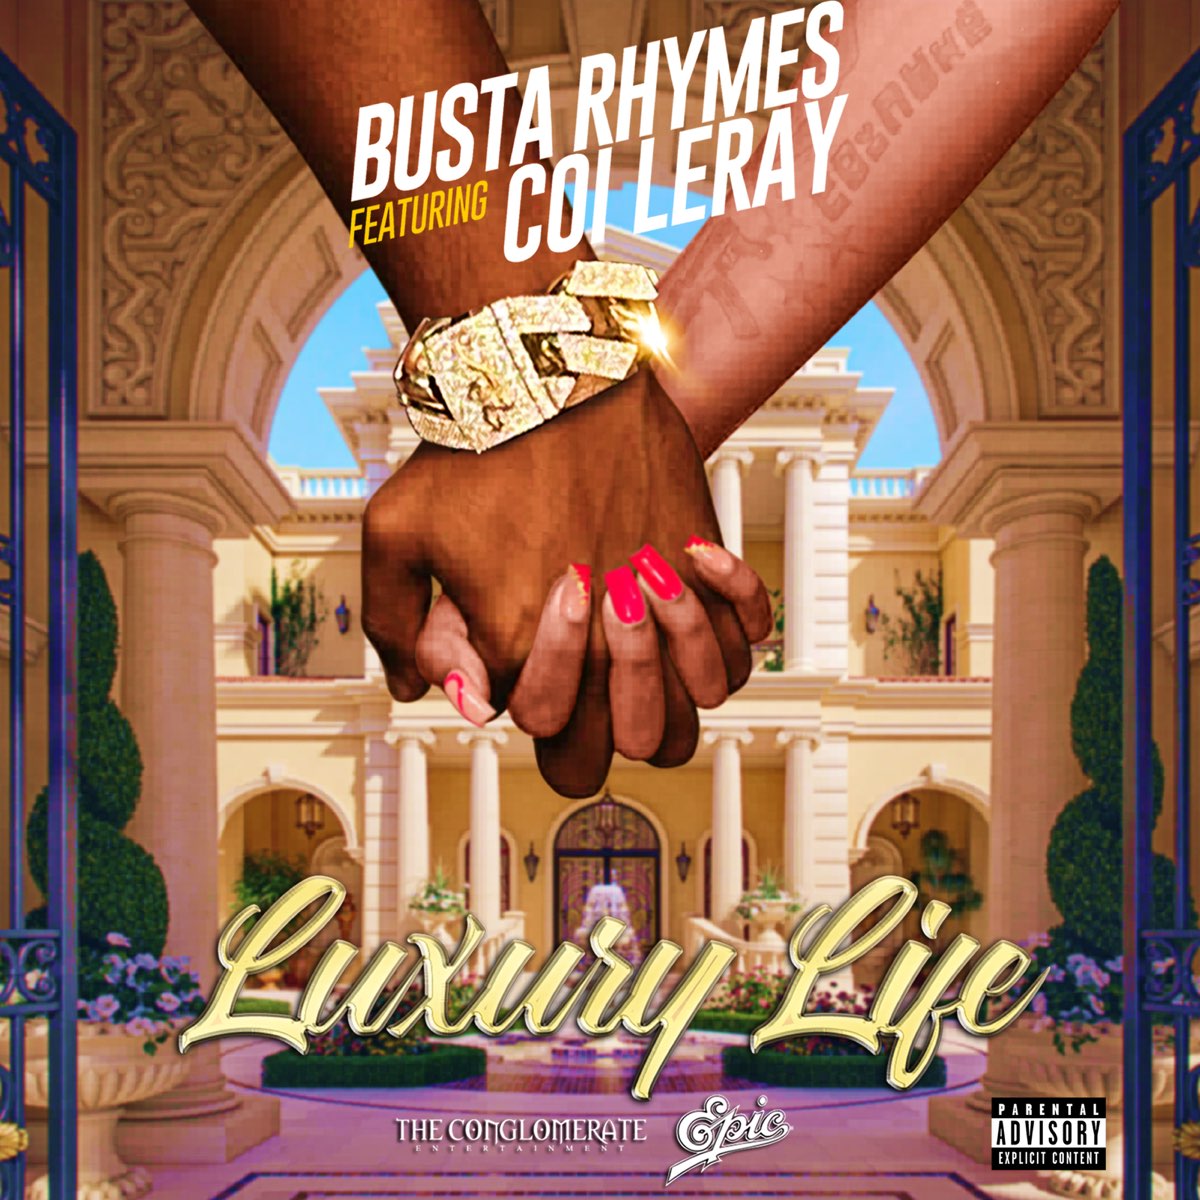 Busta Rhymes & Coi Leray Reunite For â€œLuxury Lifeâ€ Single #CoiLeray